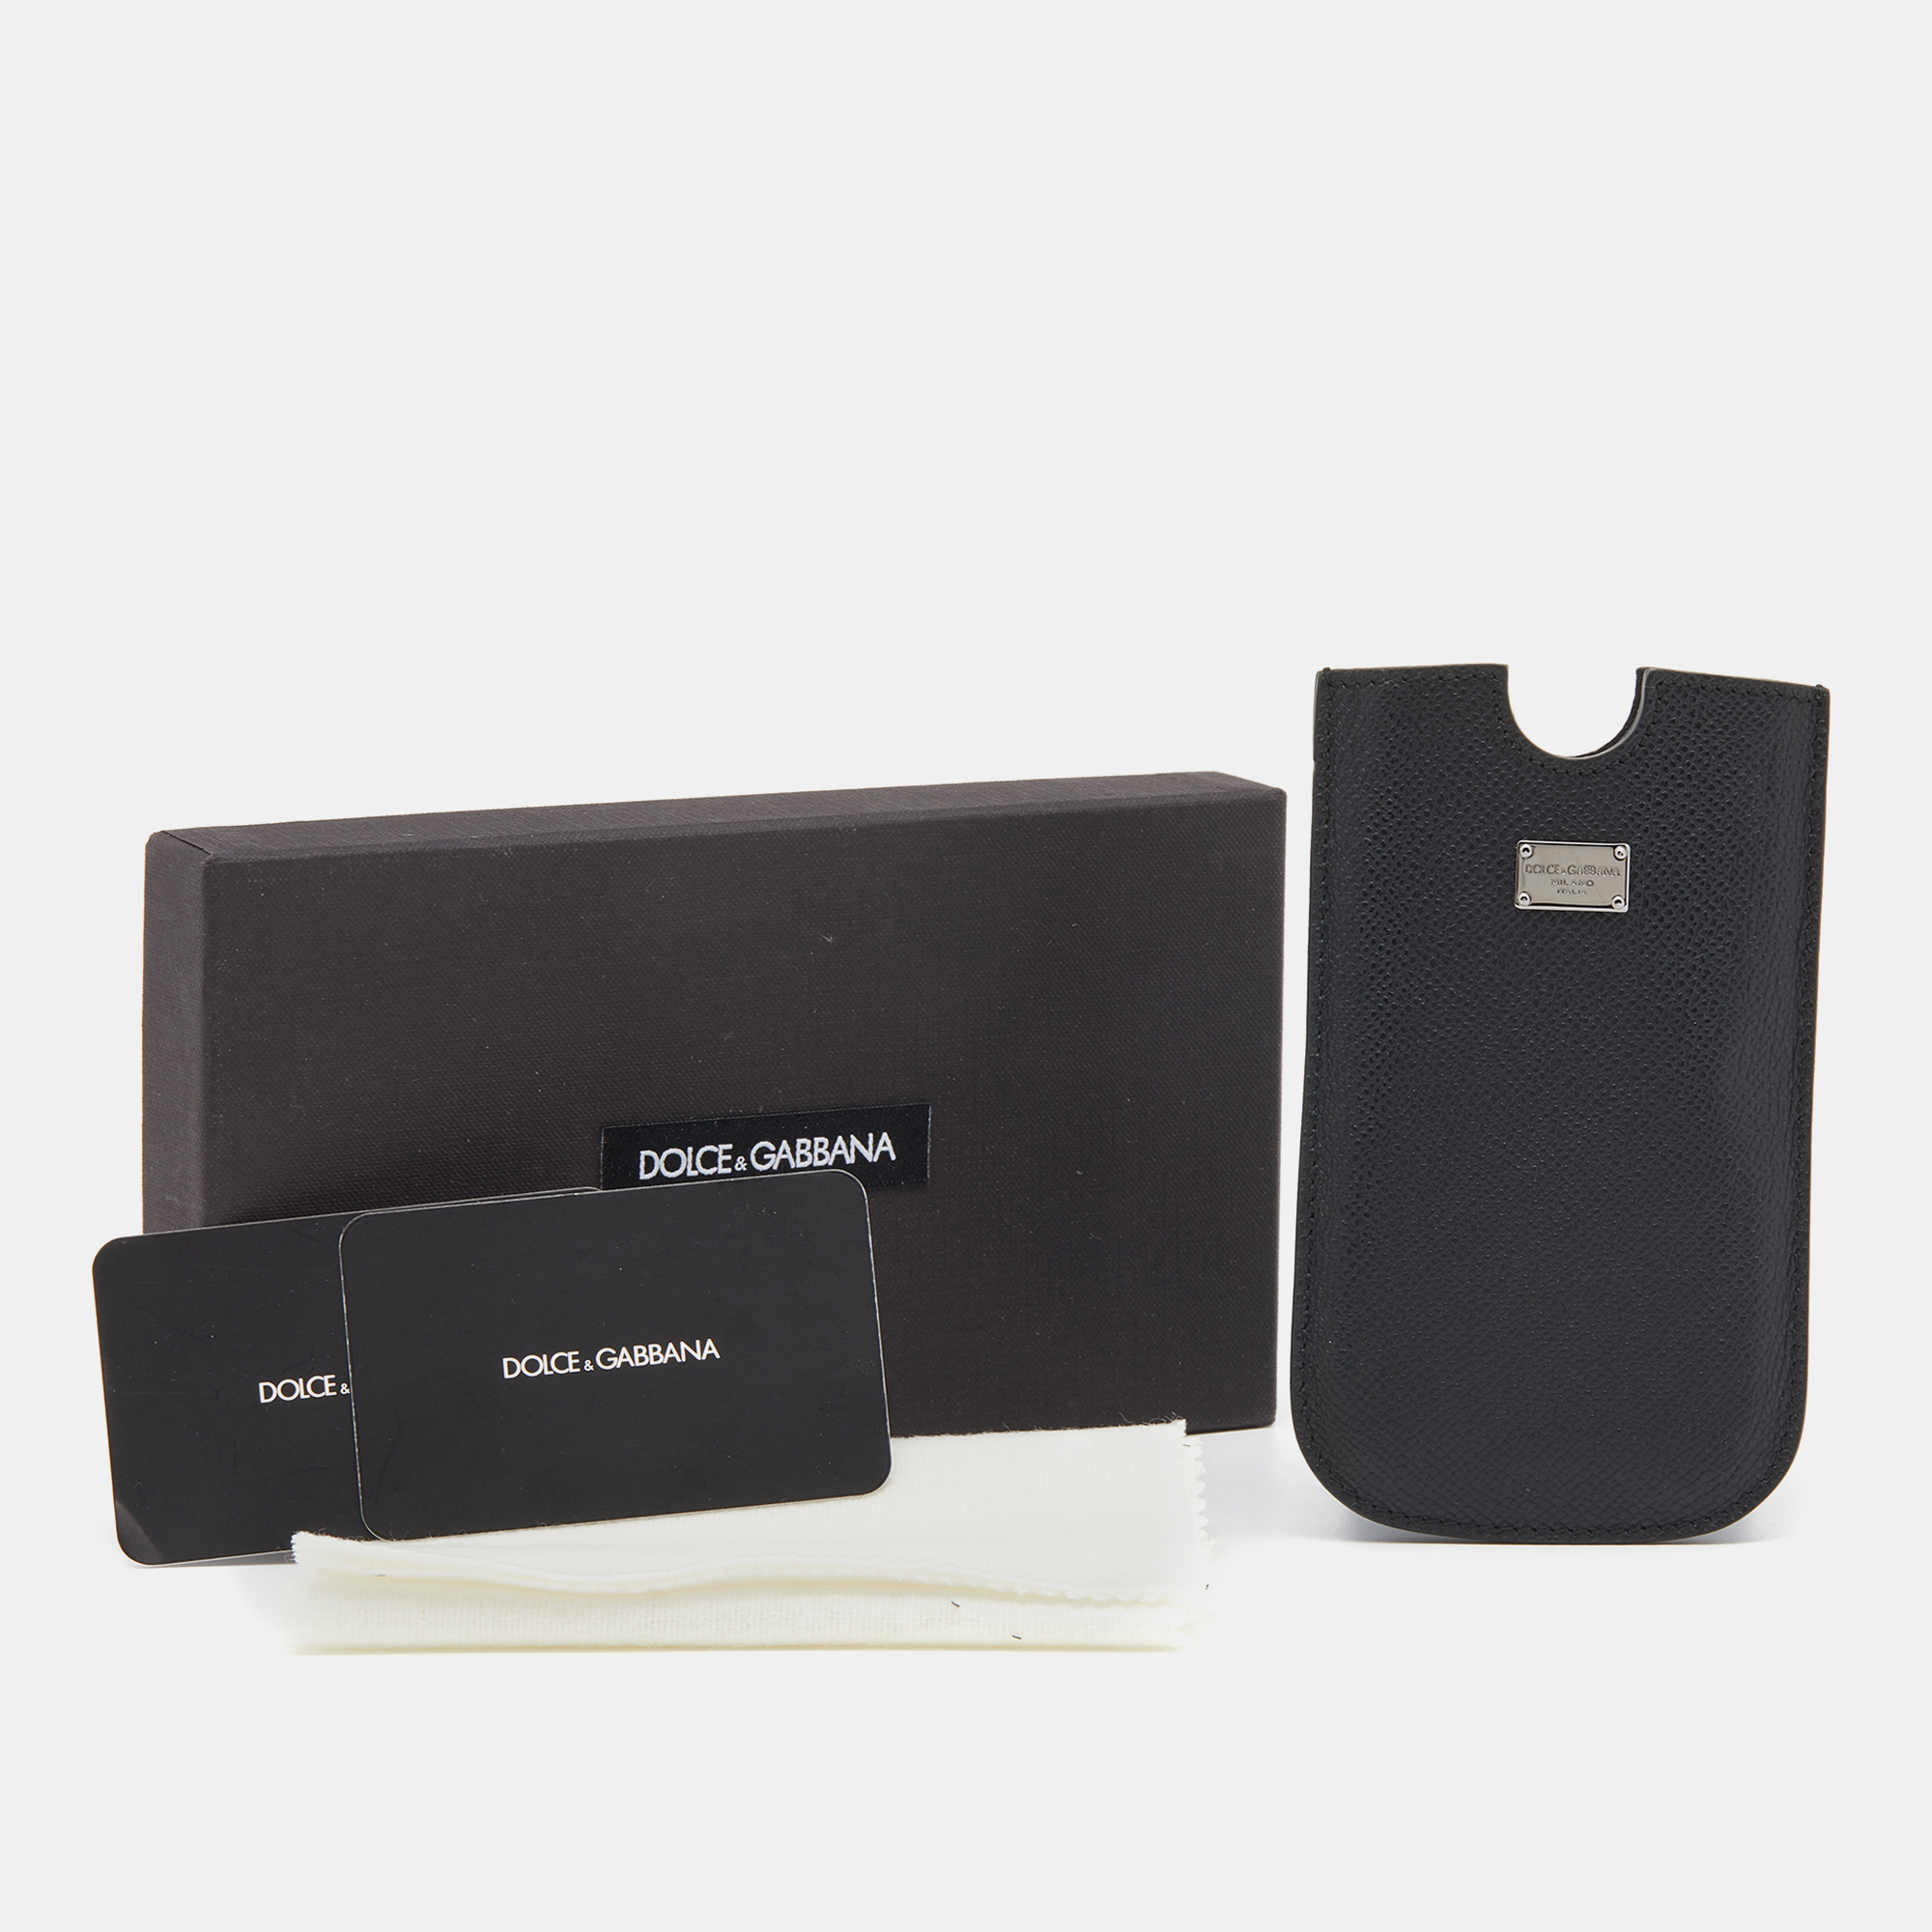 Dolce & Gabbana Black Leather SIII Smartphone Case